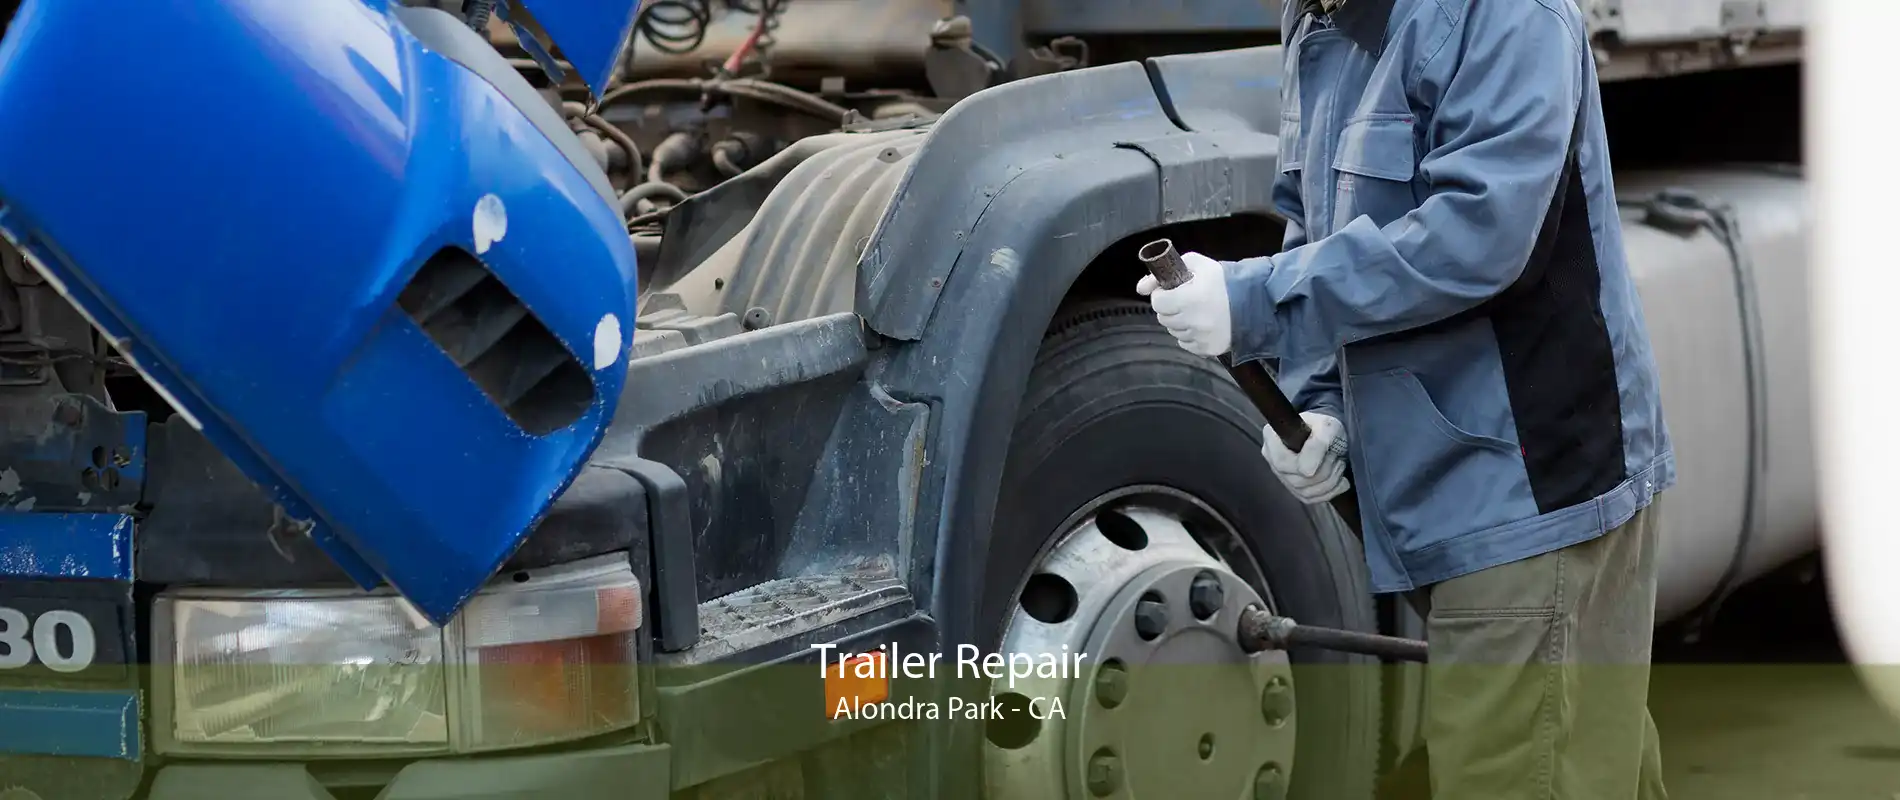 Trailer Repair Alondra Park - CA